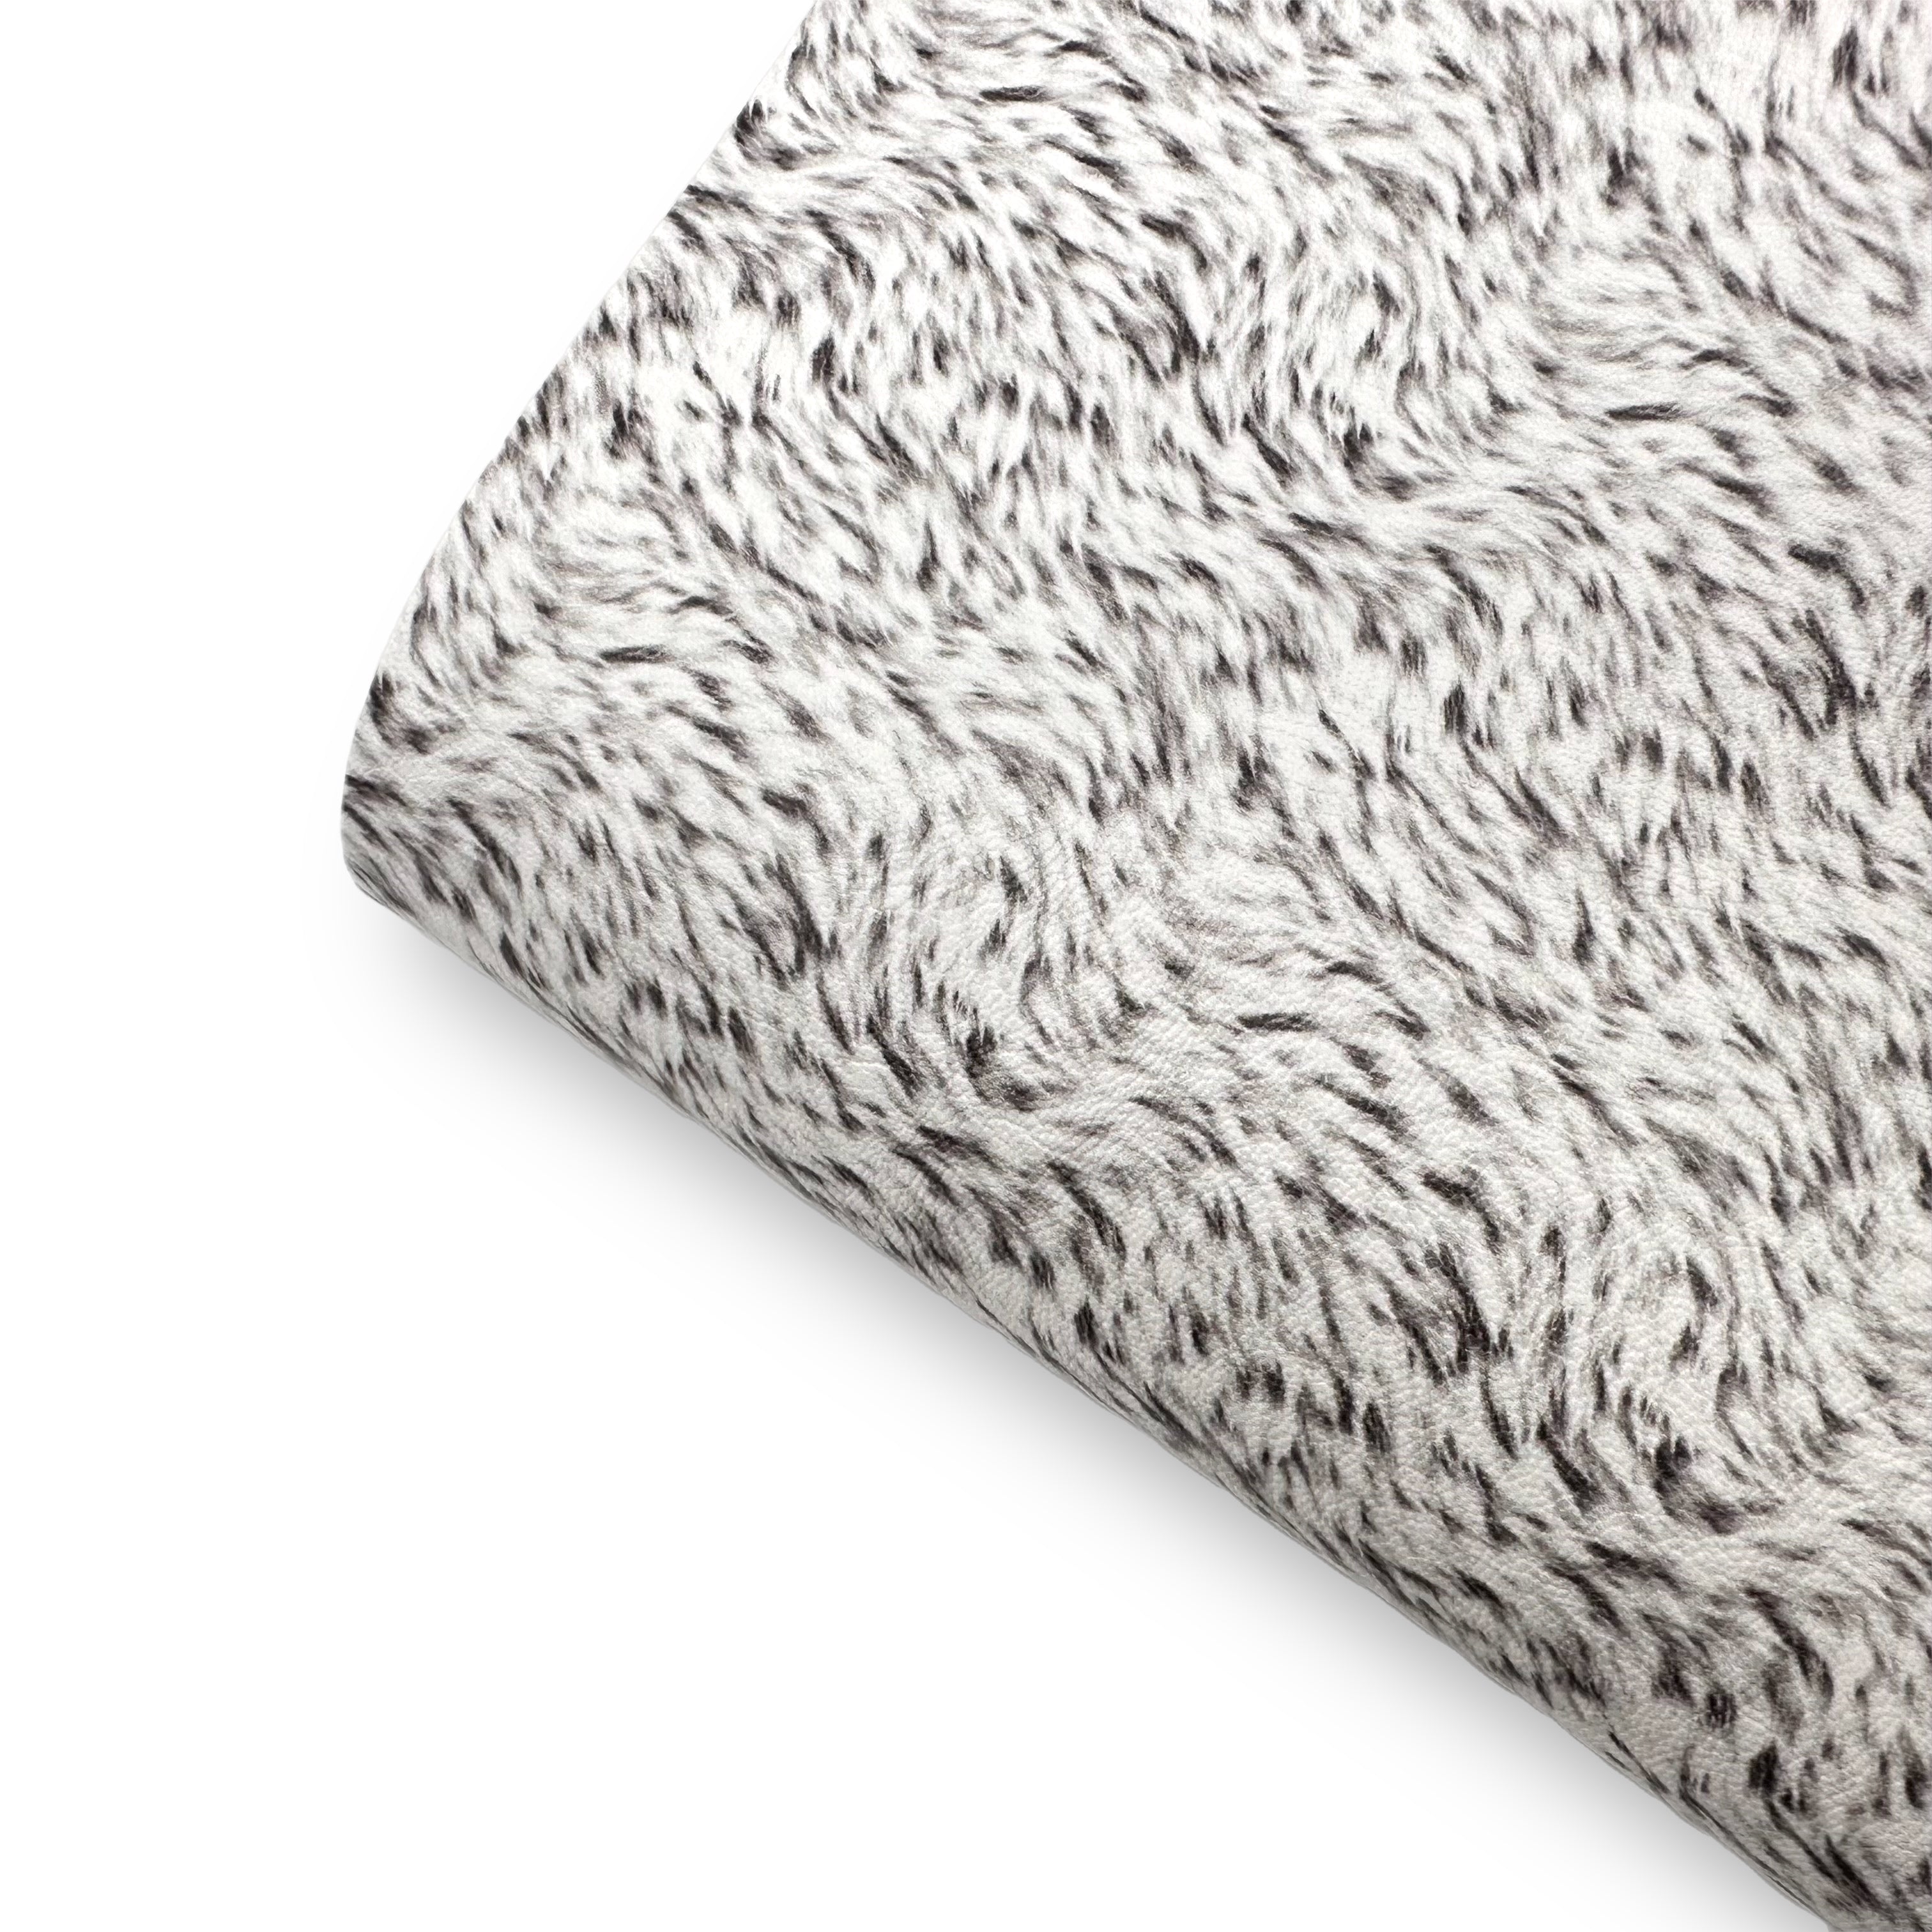 Penguin Fluff Effect Premium Faux Leather Fabric Sheets